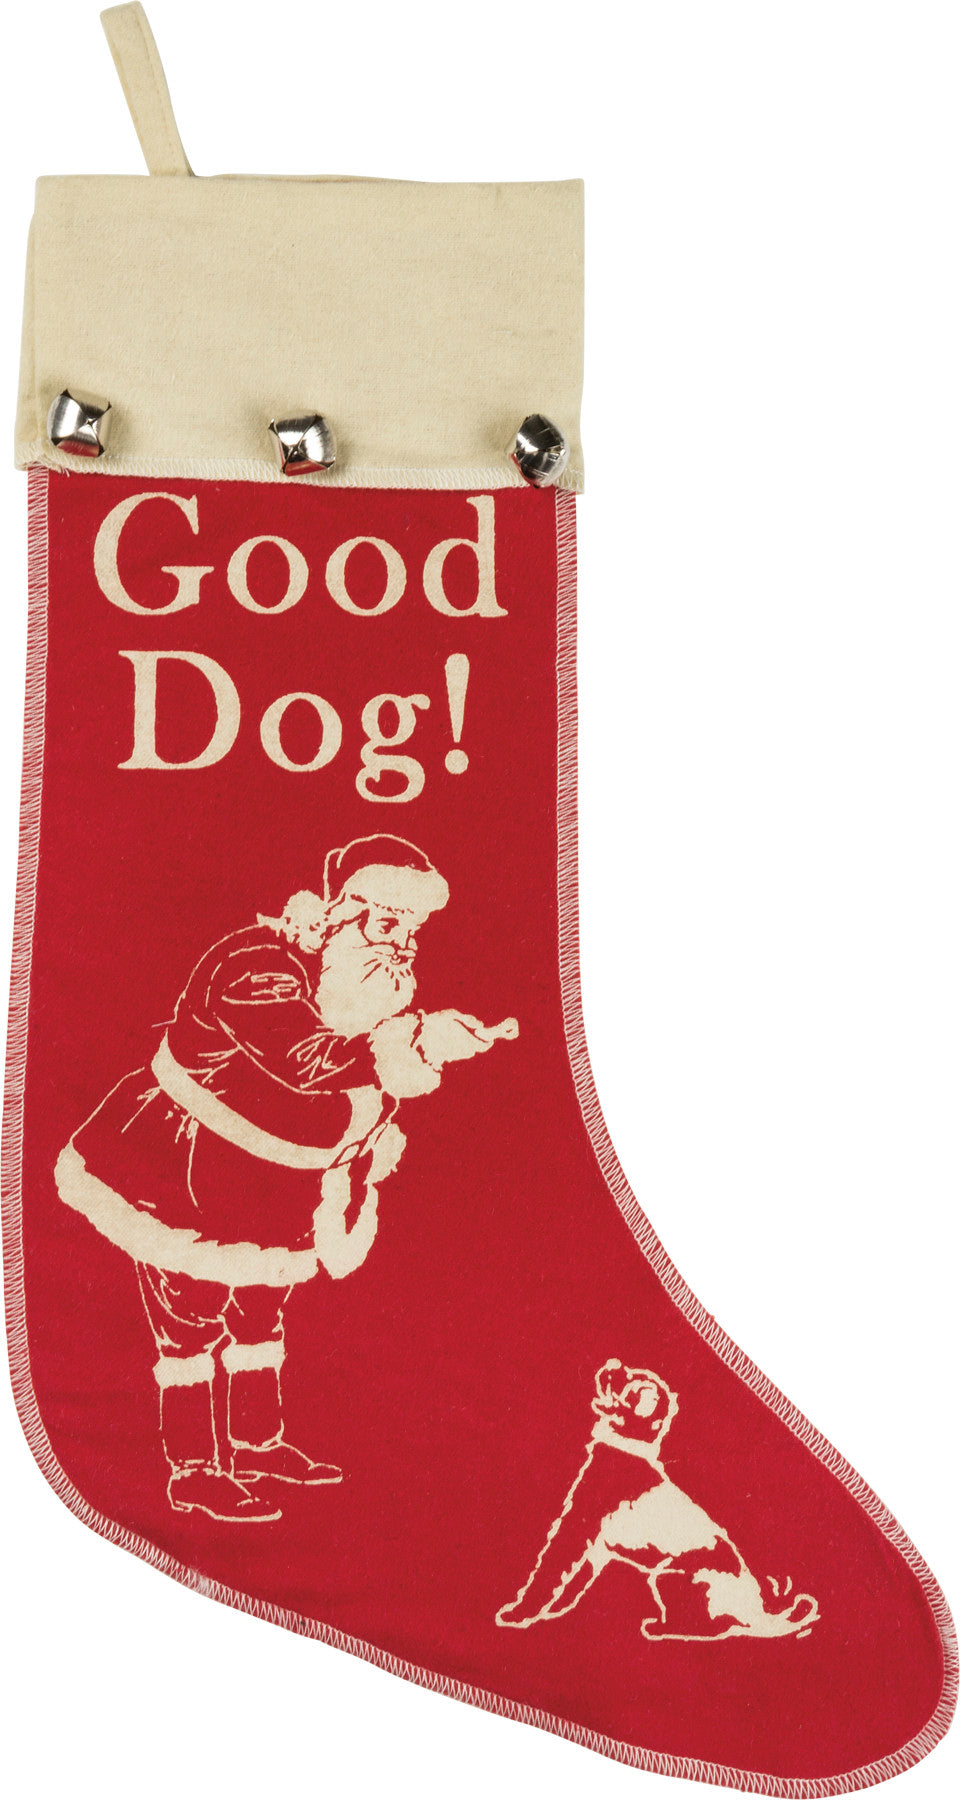 Vintage Good Dog Stocking